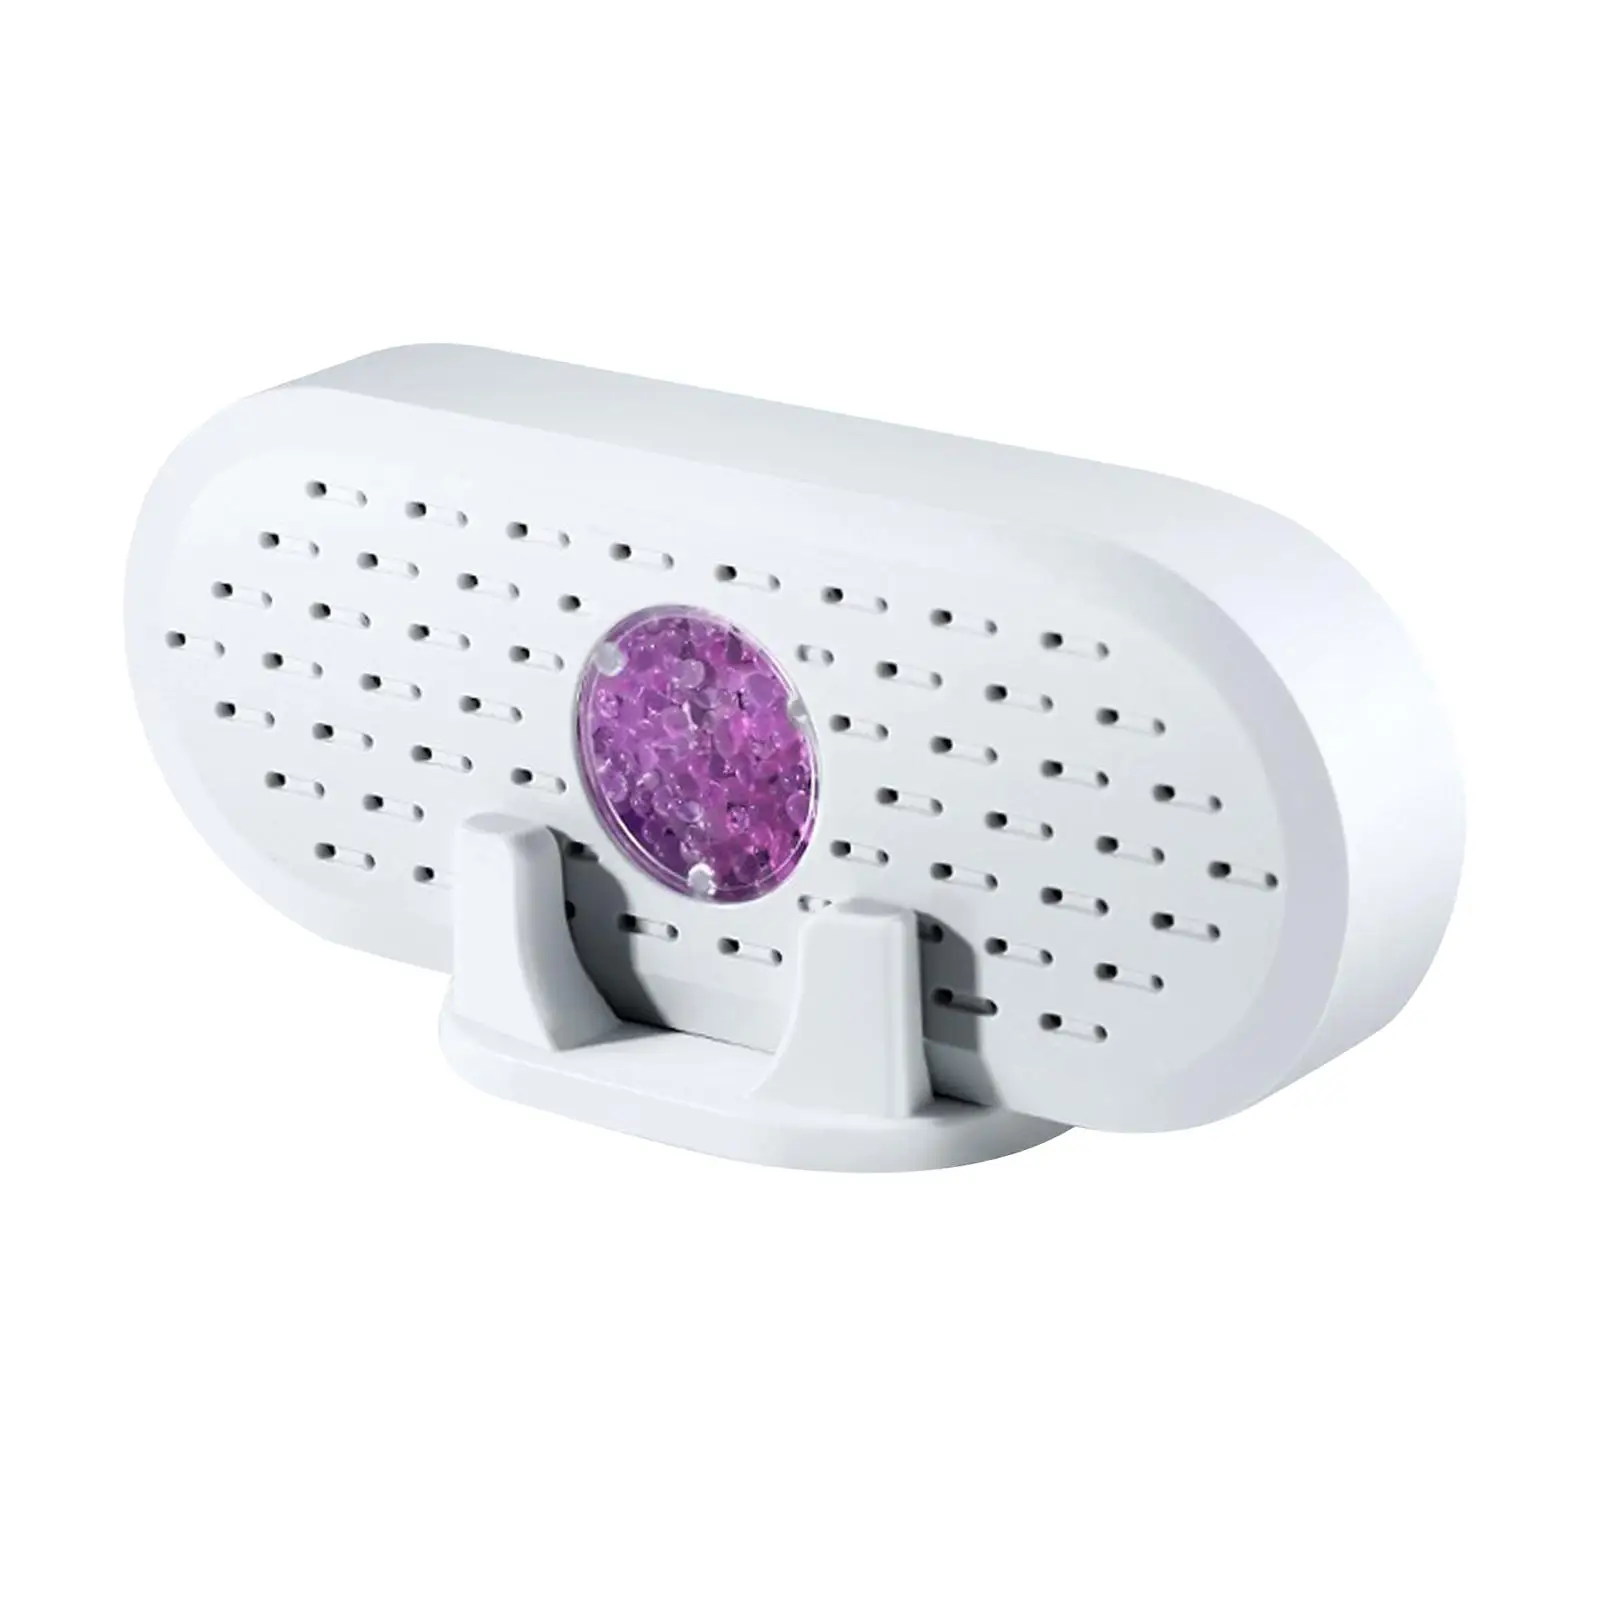 Portable Mini Dehumidifier Auto Shut Off Silent Moisture Absorber Air Dryer 1L for Office Closet Basement Bedroom Bathroom